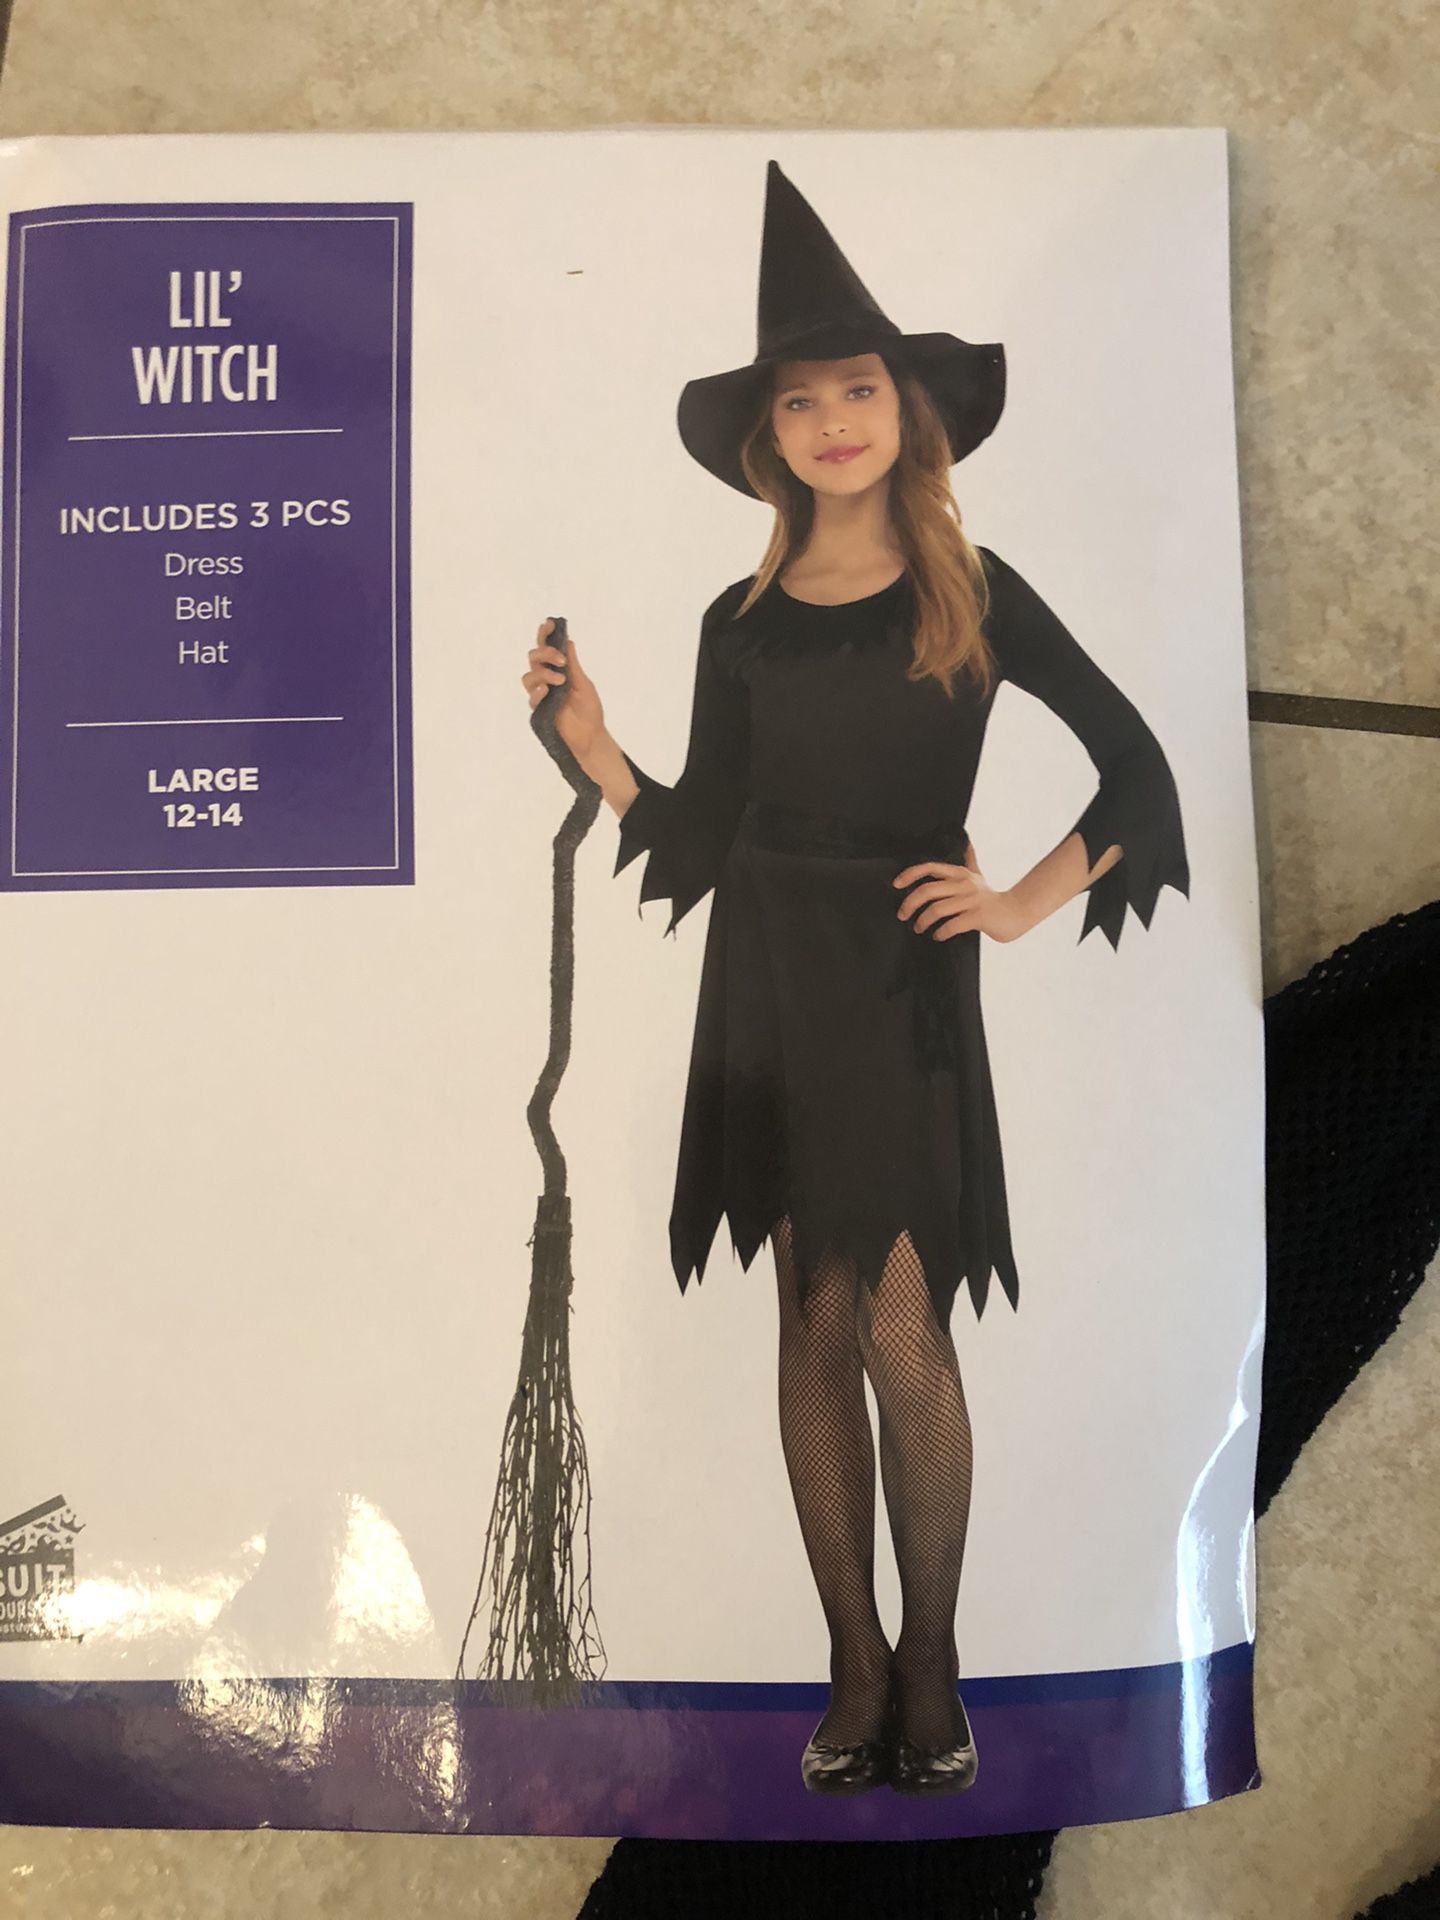 Kids Witch Costume